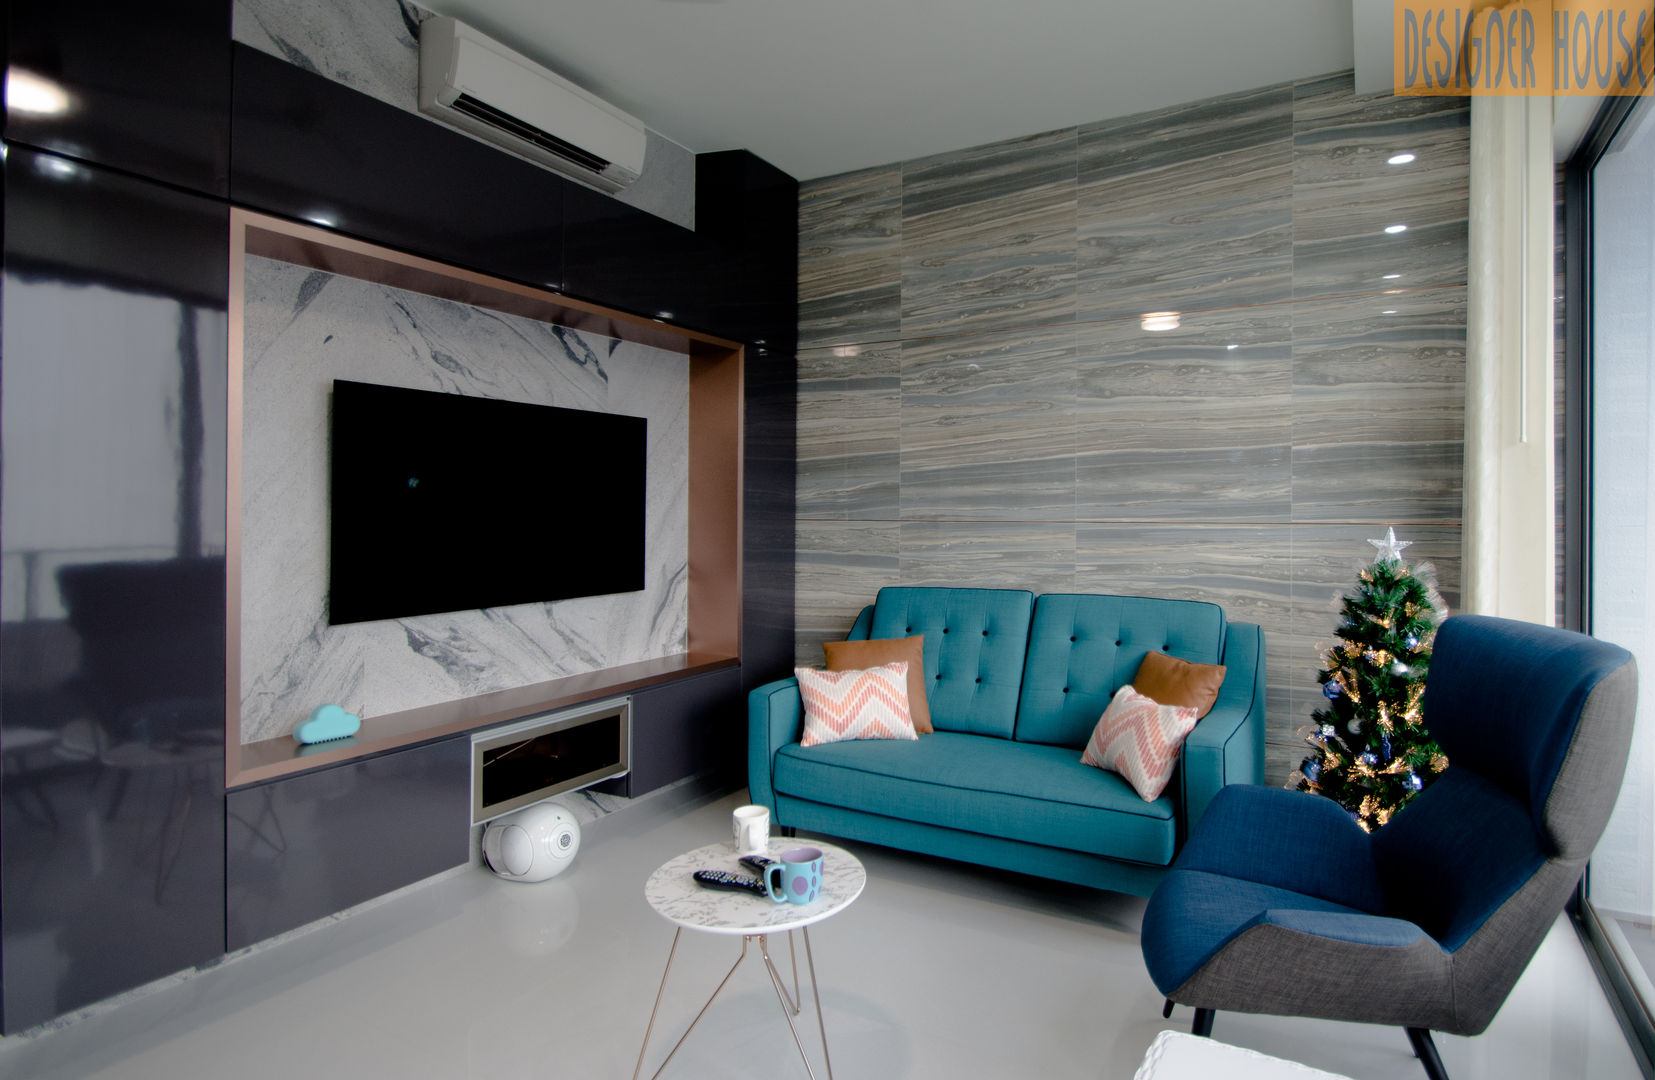 Barley Ridge Penthouse Project, Designer House Designer House Salas de estilo moderno Caliza